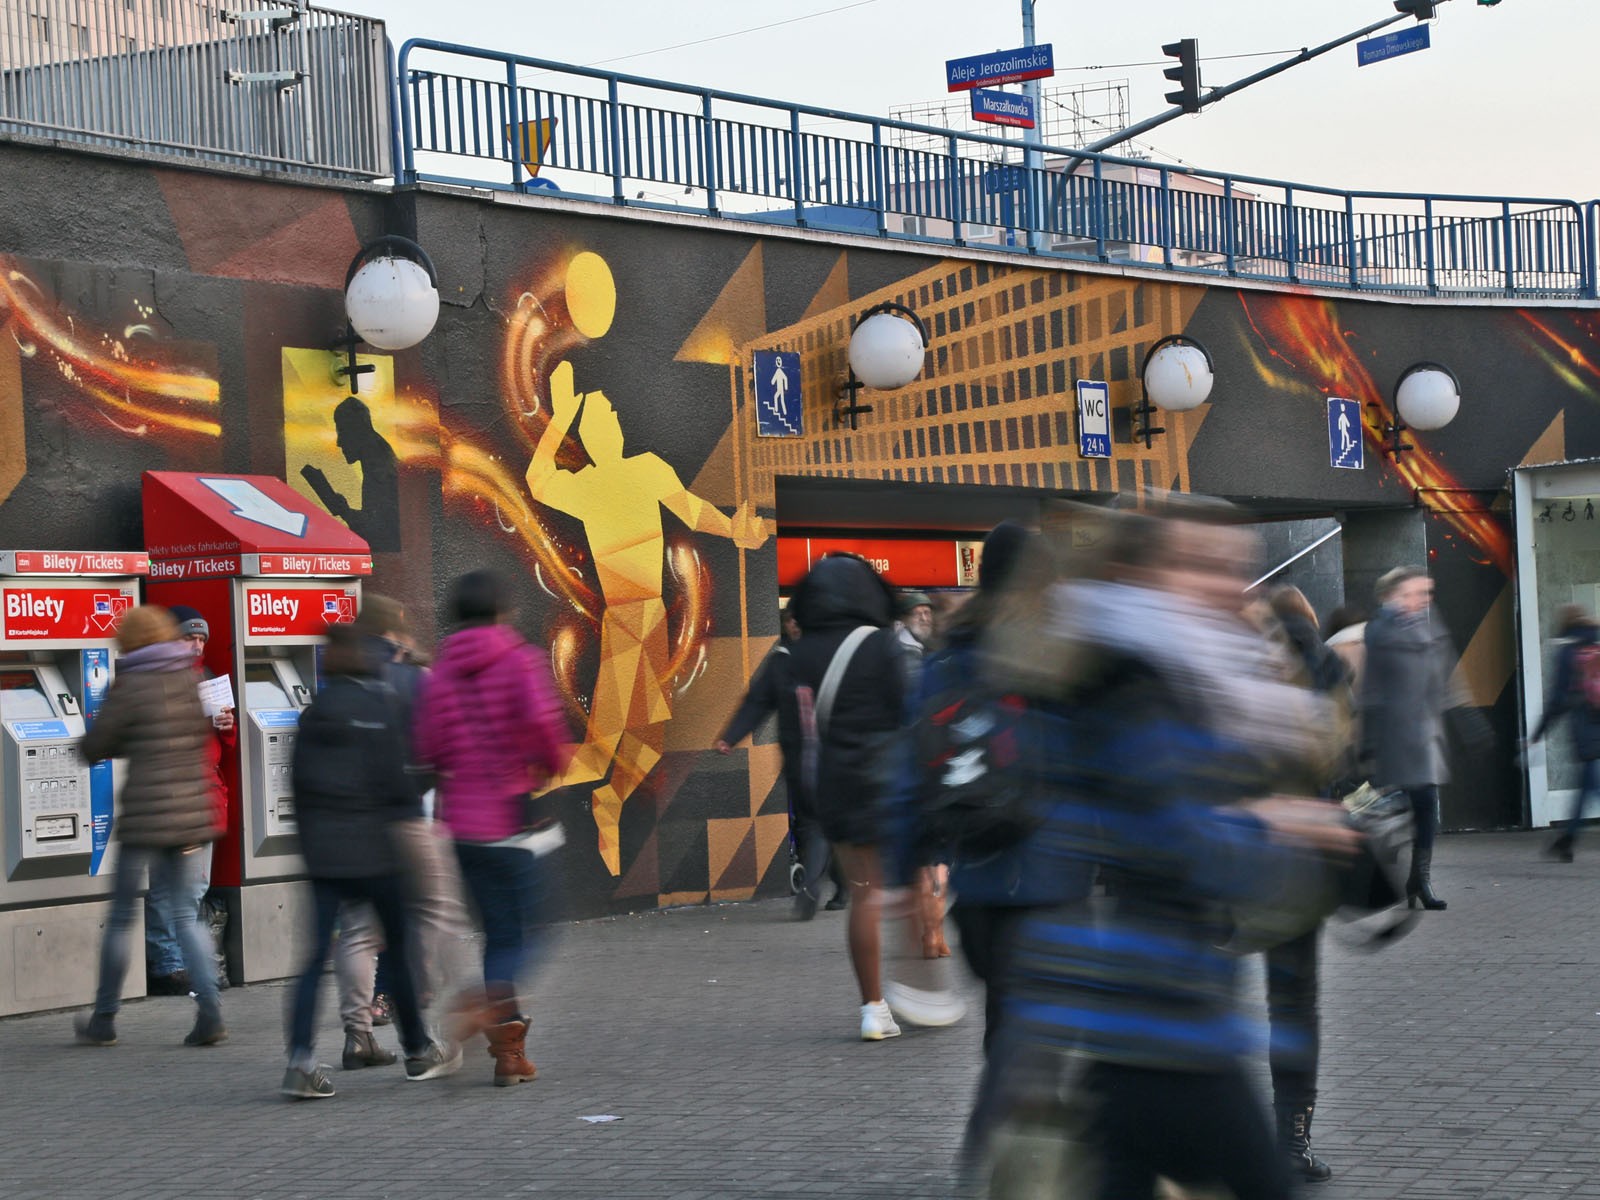 Amazing mural for PGE We provide energy - Warsaw Centrum subway station | We provide energy | Portfolio